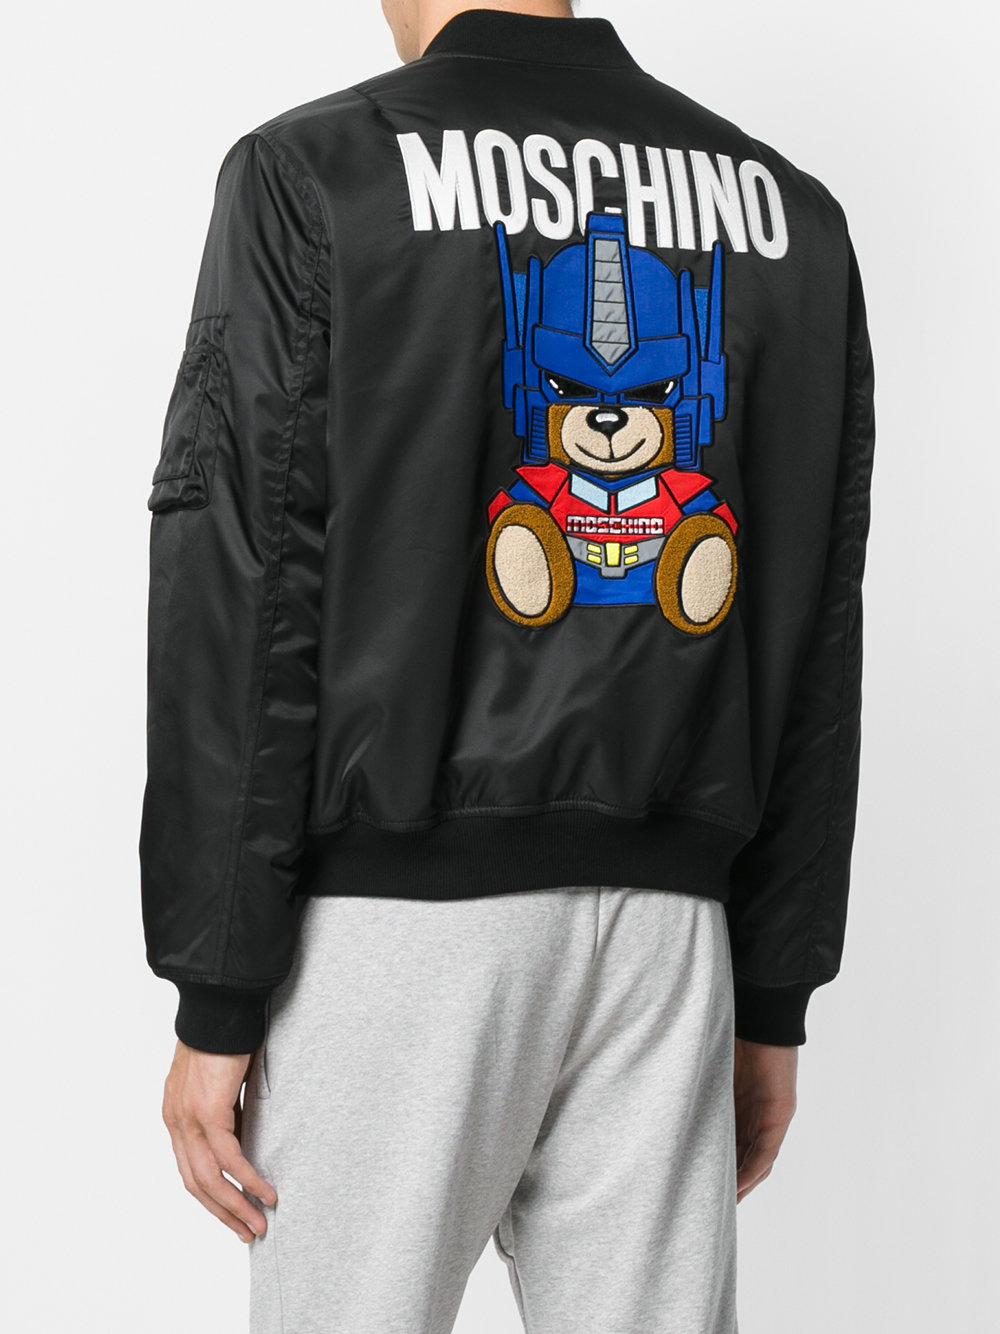 Moschino Couture Transformers Bear Bomber Jacket - Original Allure